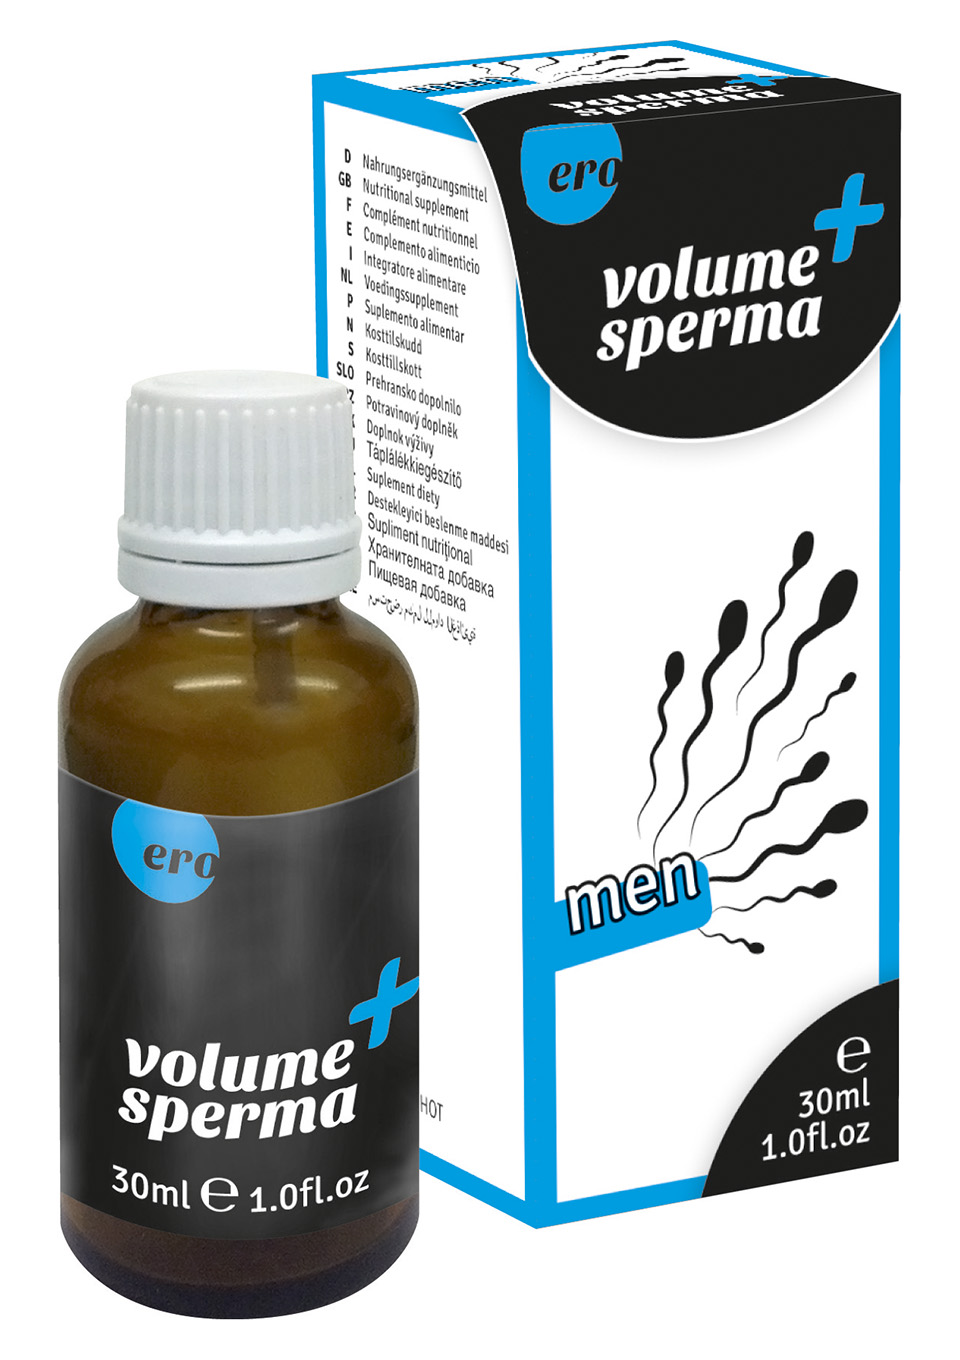 Volume Sperma+ men-30ml.